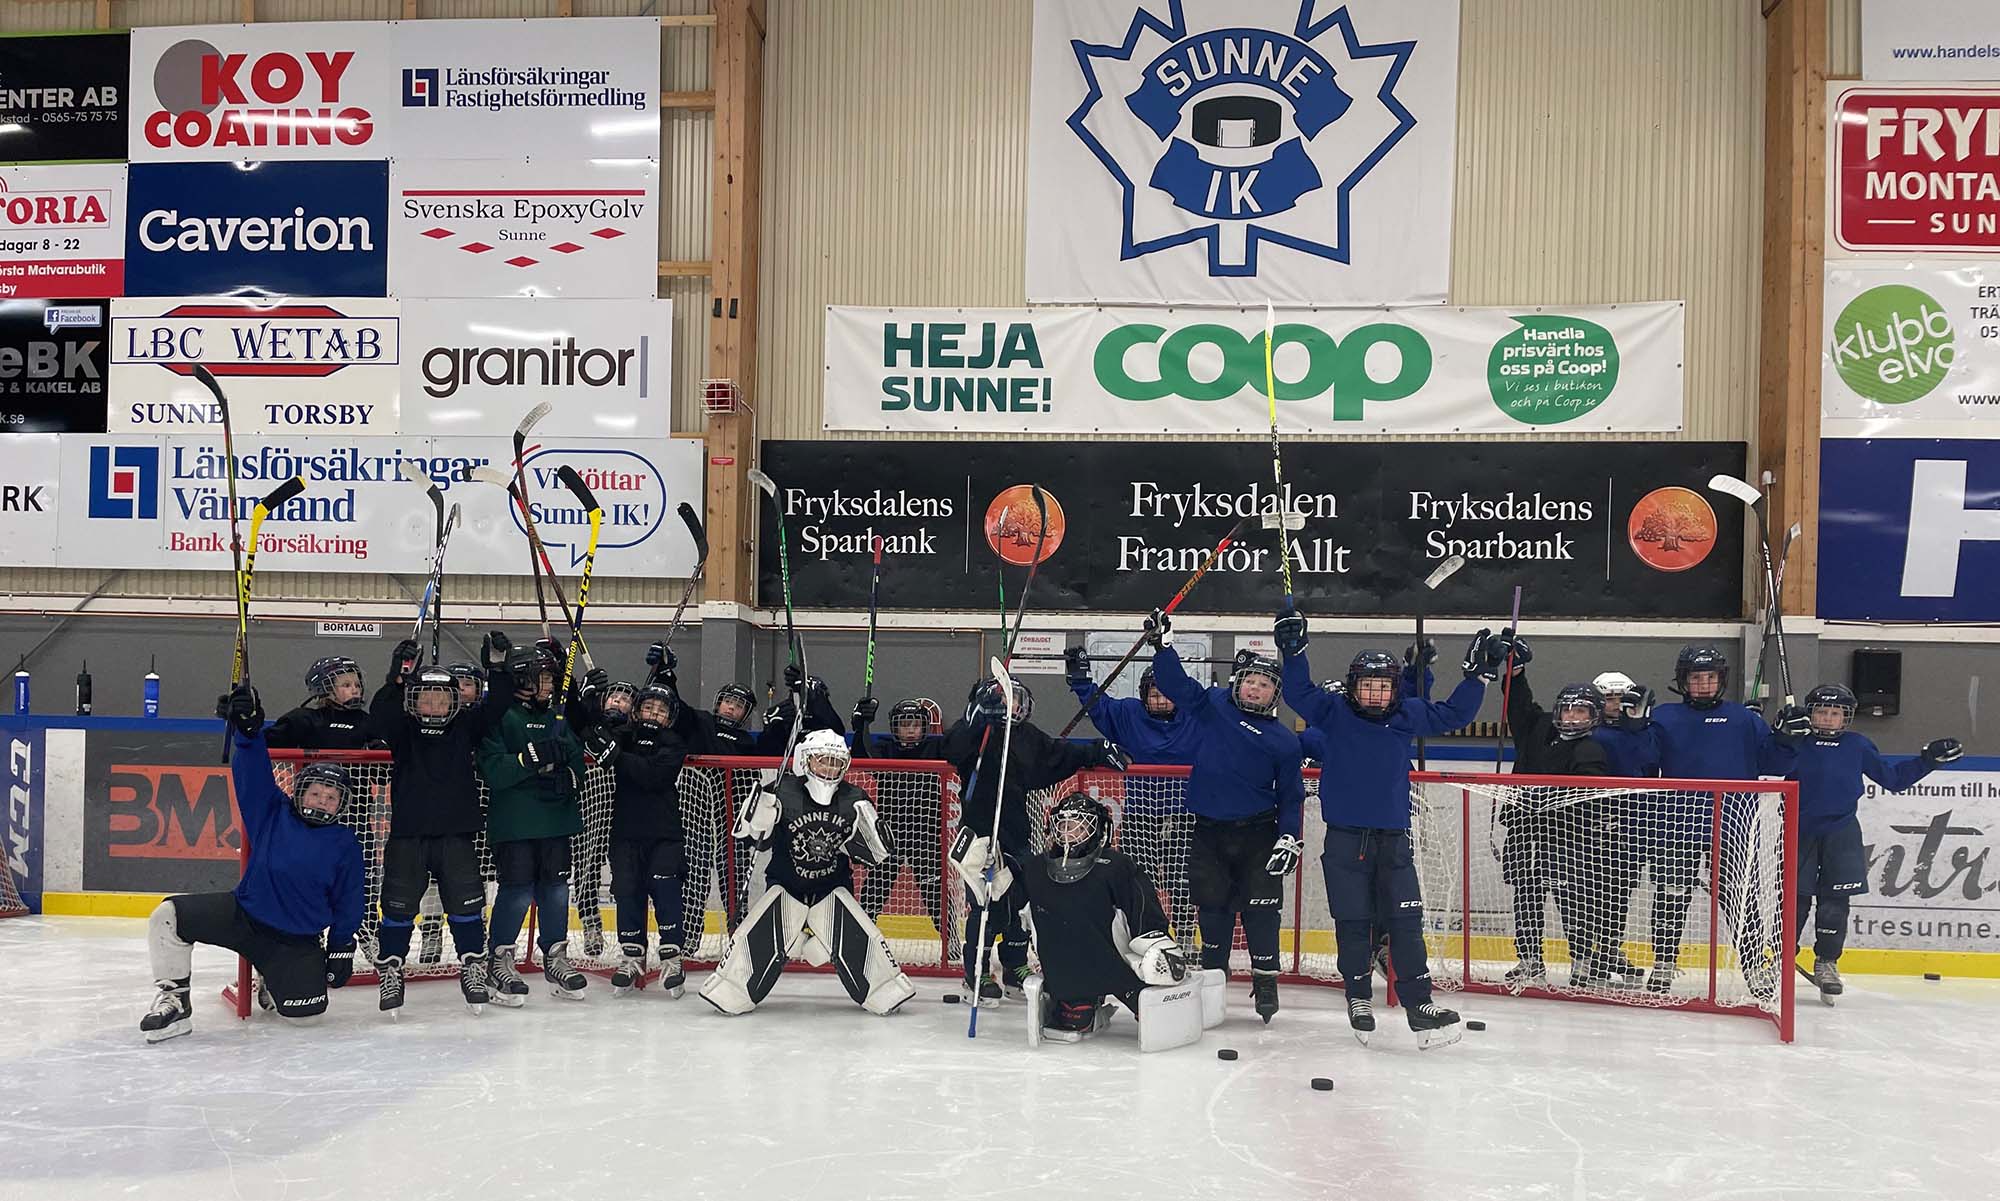 Hockey practice at Sunne IK